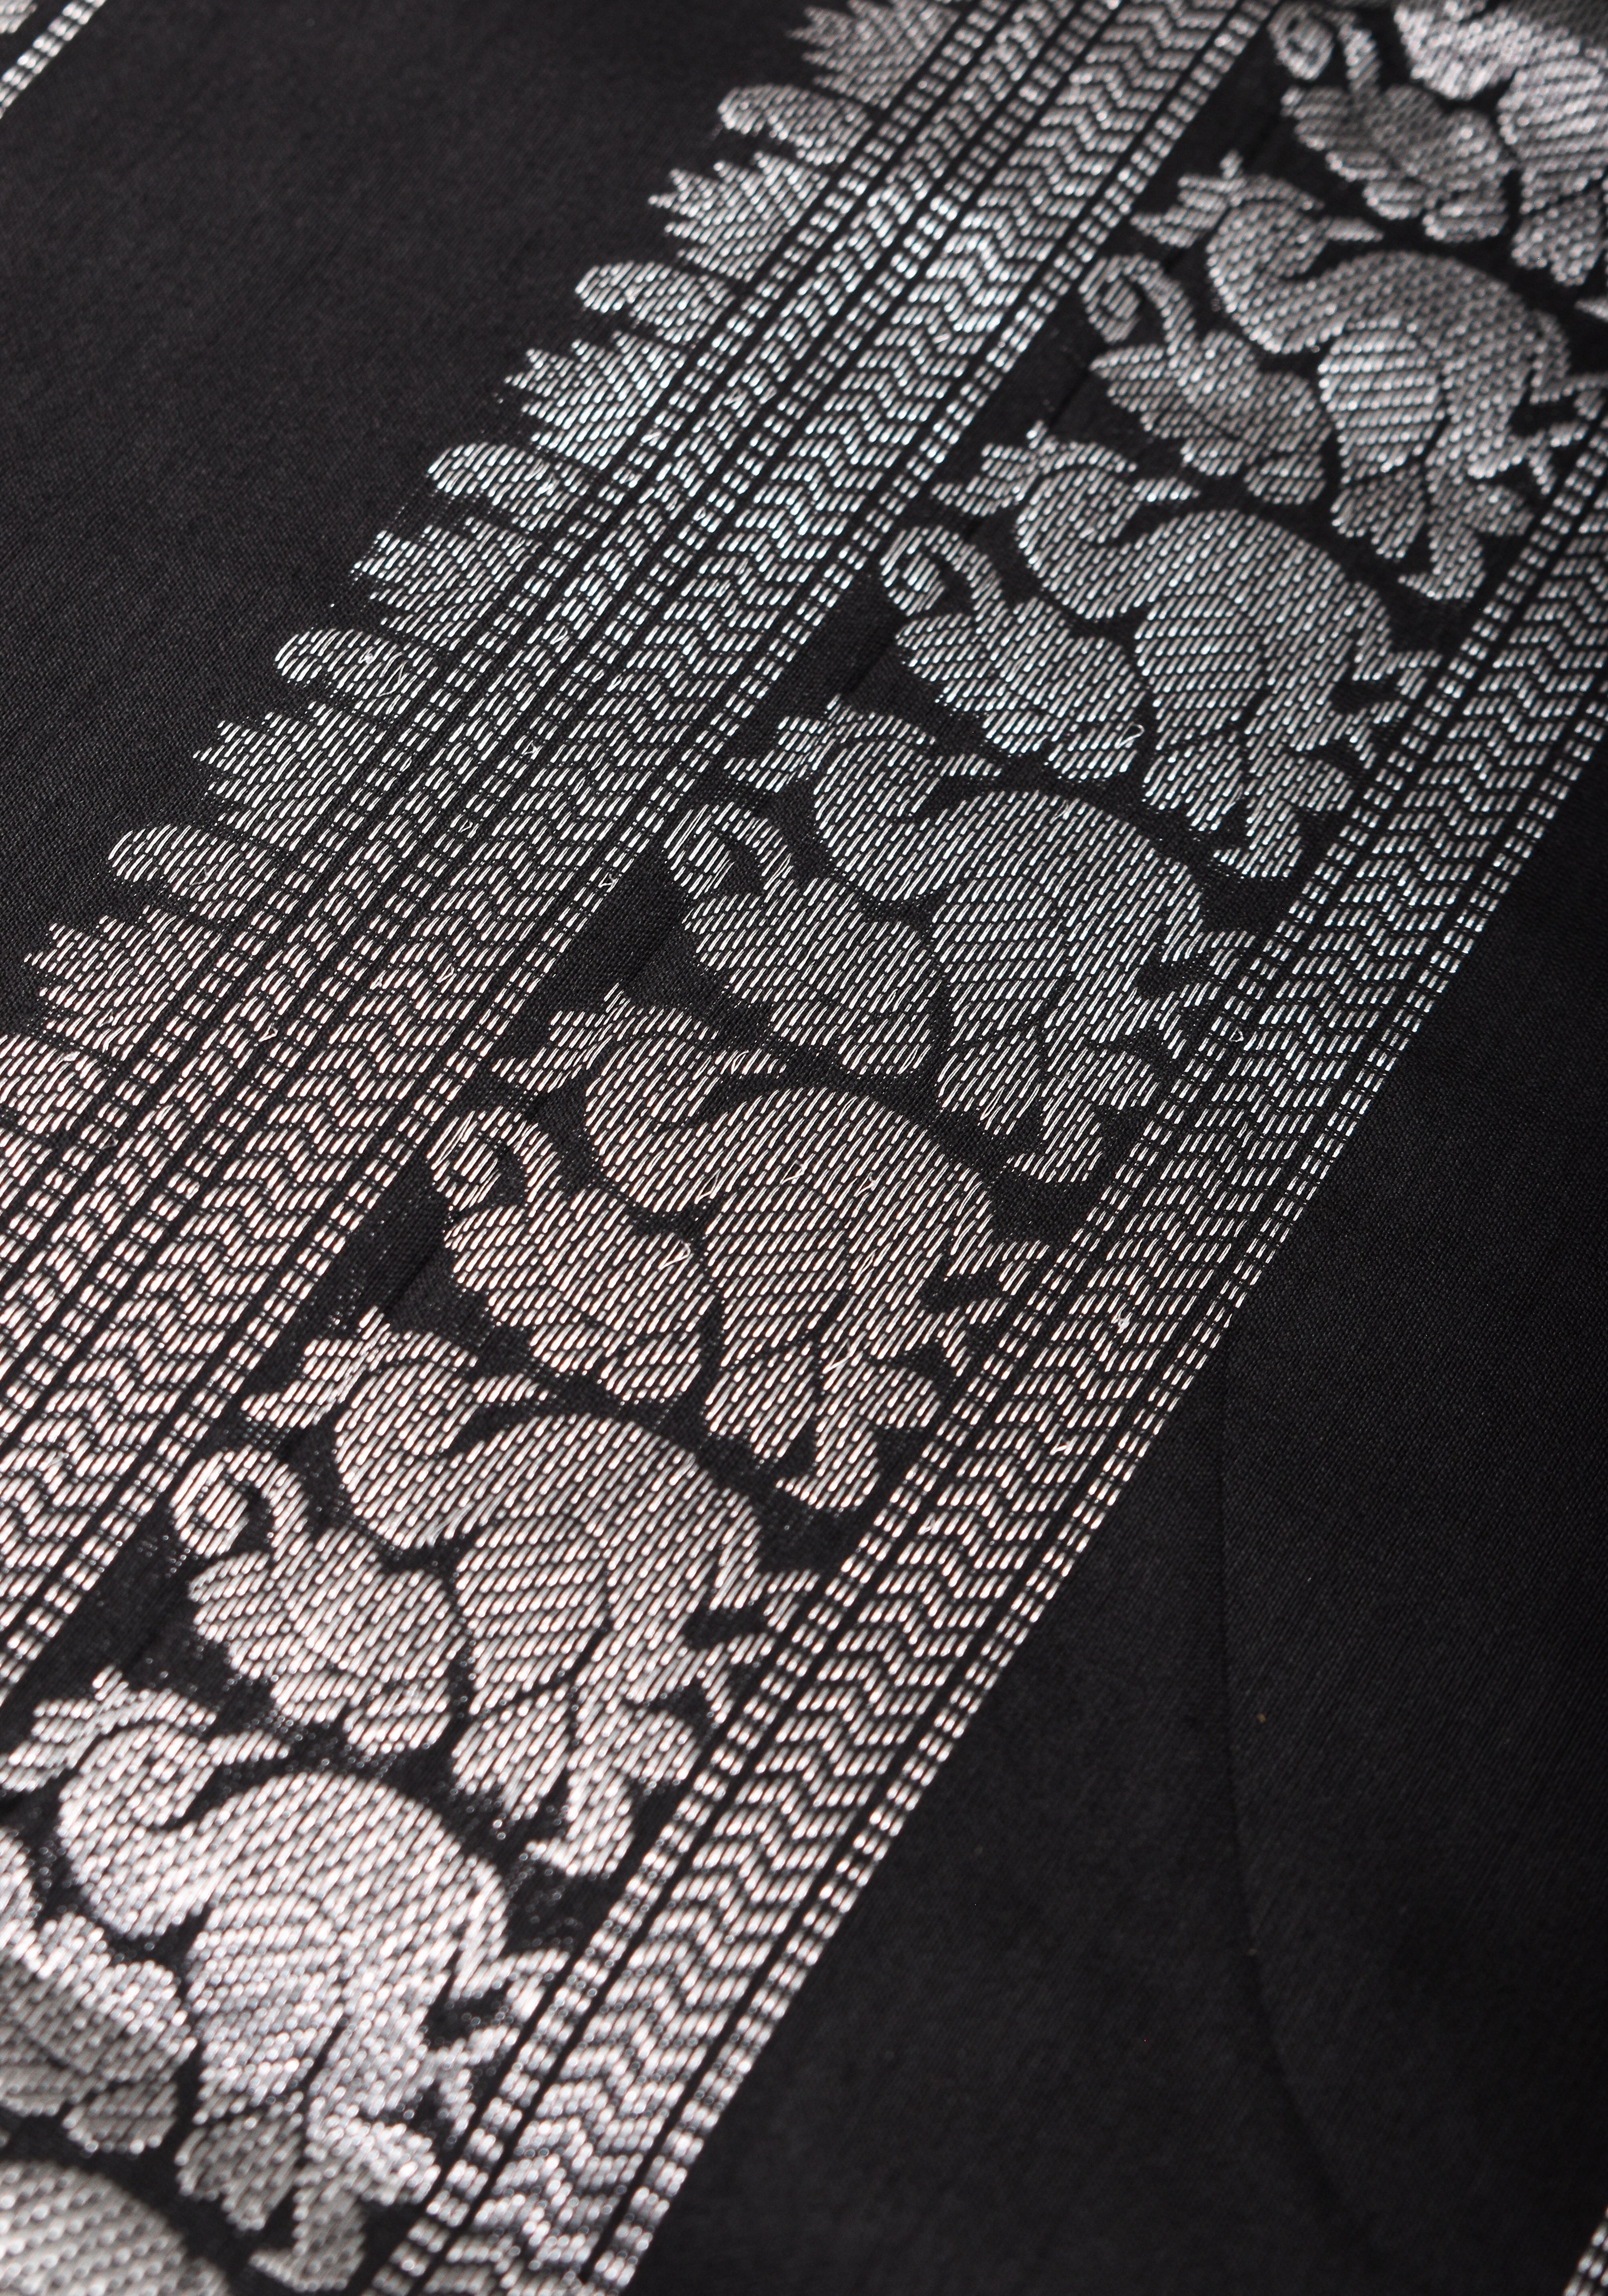 Cotton Silk Saree in Black with Silver borders